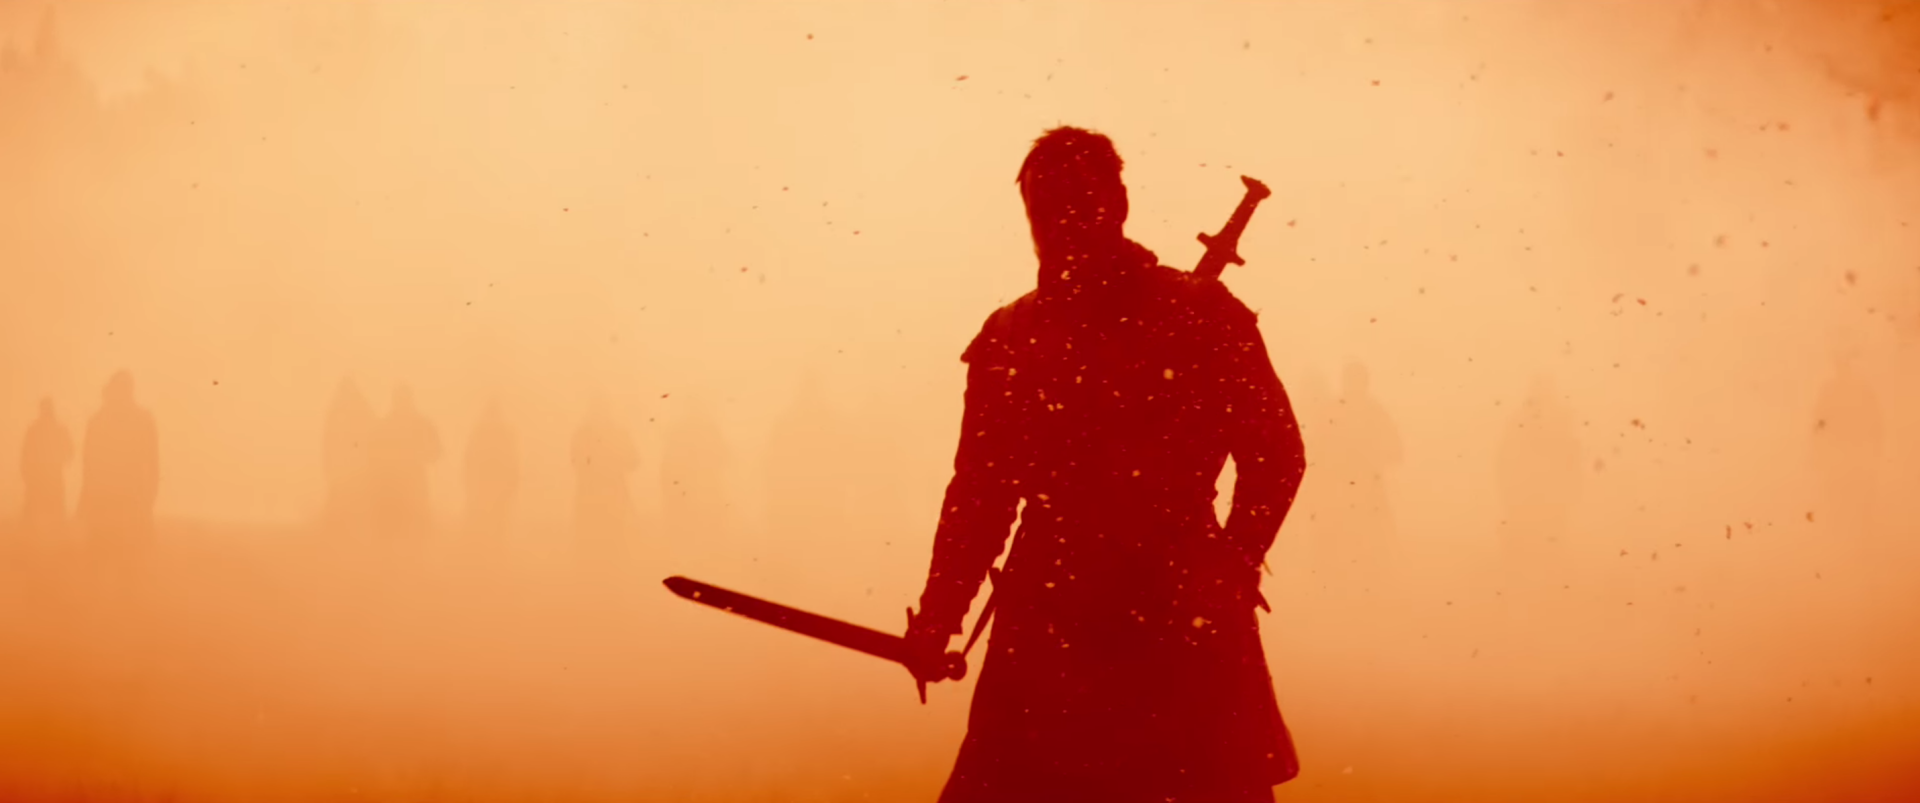 Macbeth Red Battle